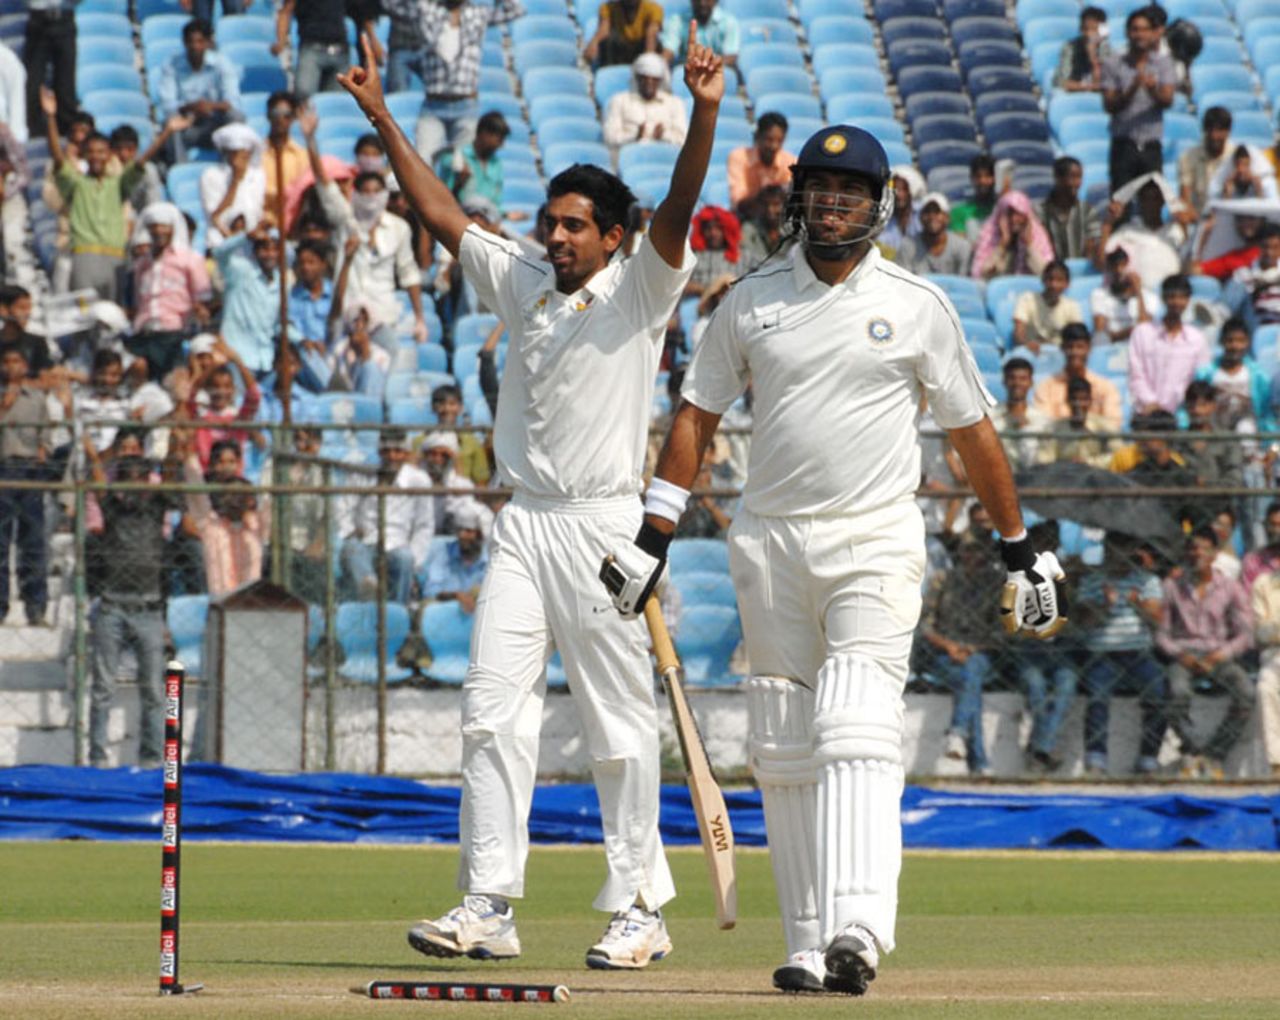 Dhawal Kulkarni got the big wicket of Yuvraj Singh, Mumbai v Rest of India, Irani Cup, Jaipur, 2nd day, October 2, 2010